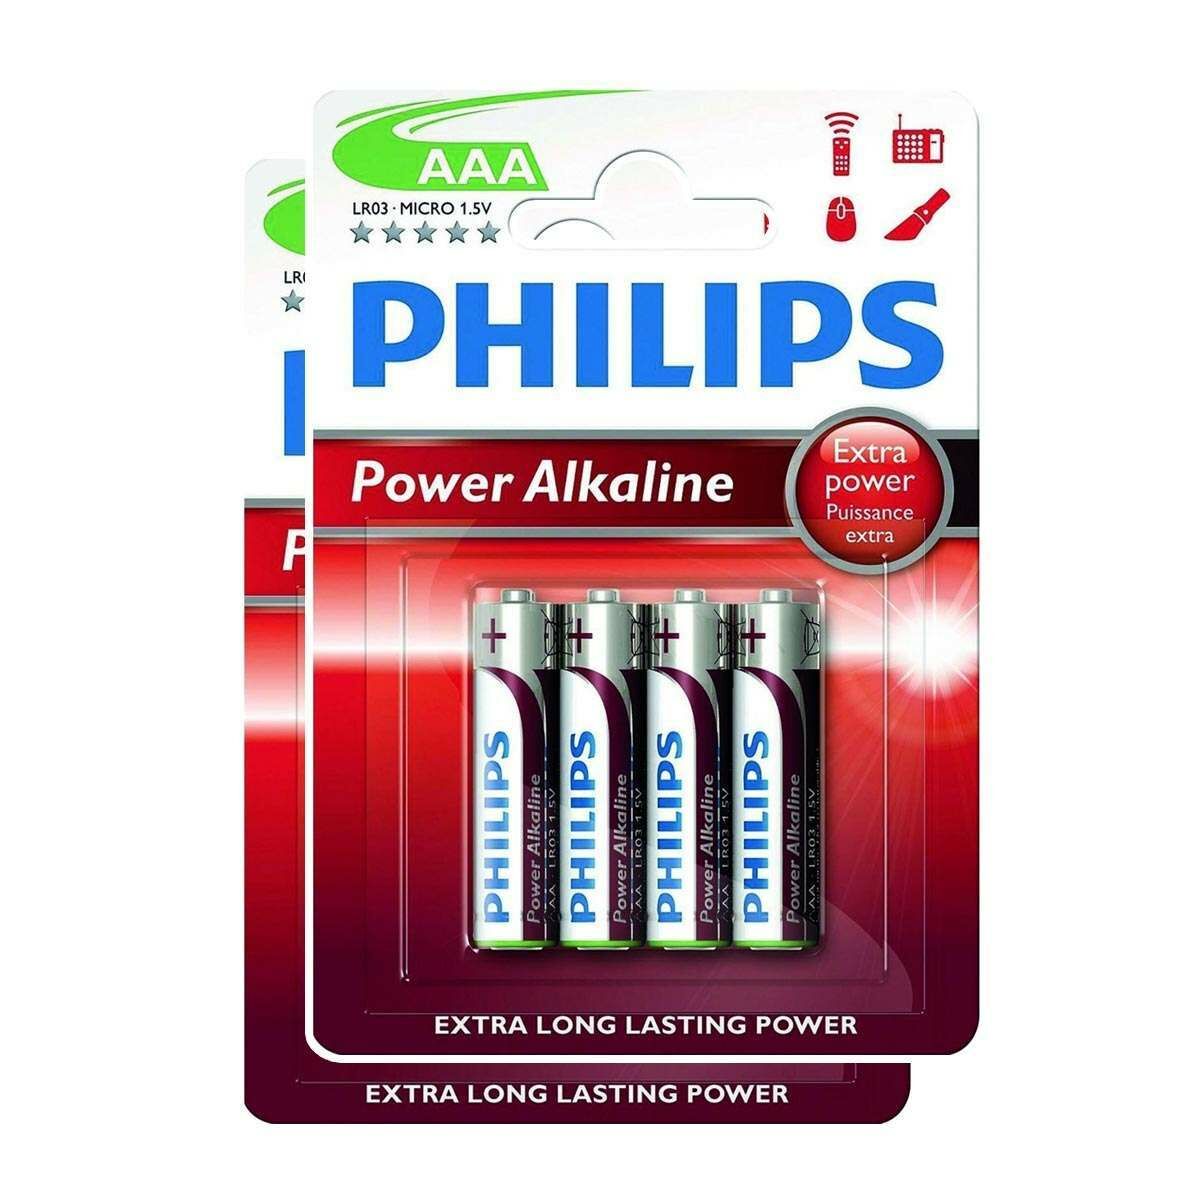 Philips Power Alkaline AAA Batteries (Pack of 8) image 1